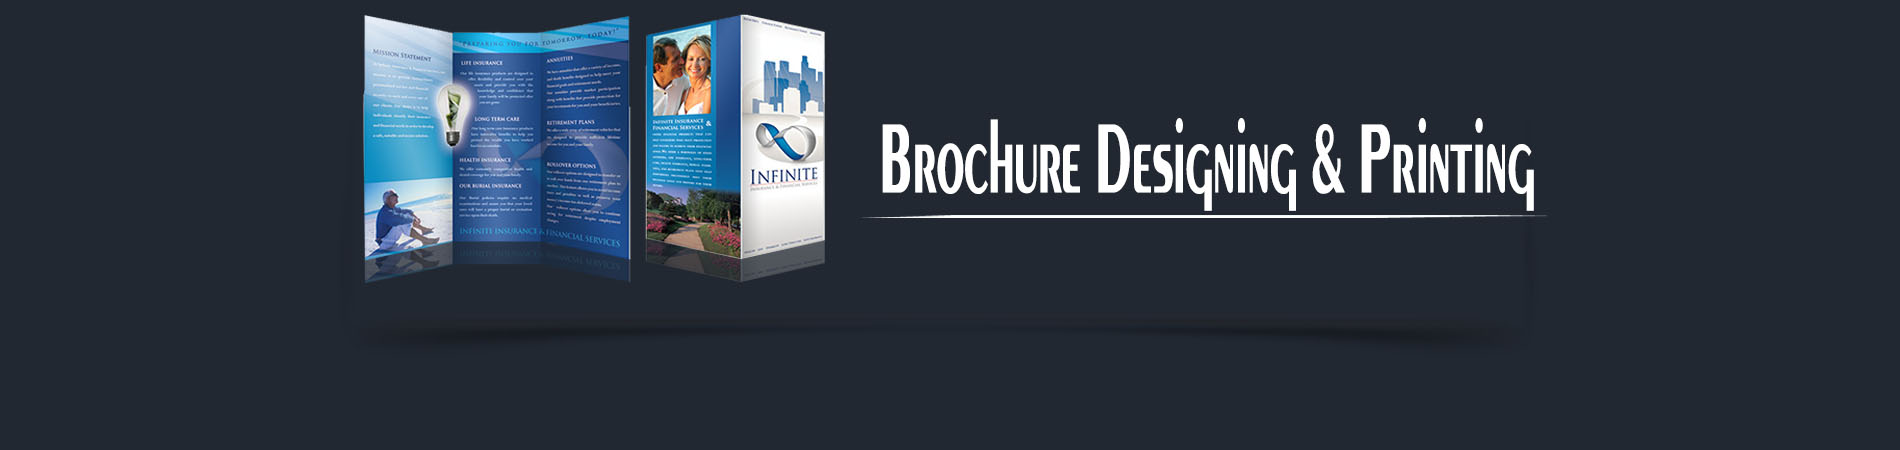 Brochure Designing & Printing in India